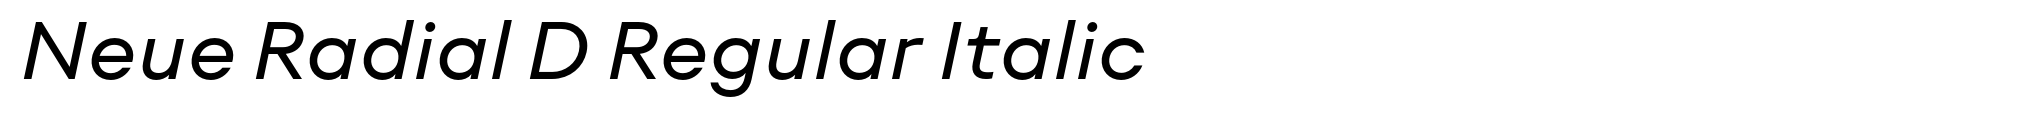 Neue Radial D Regular Italic image